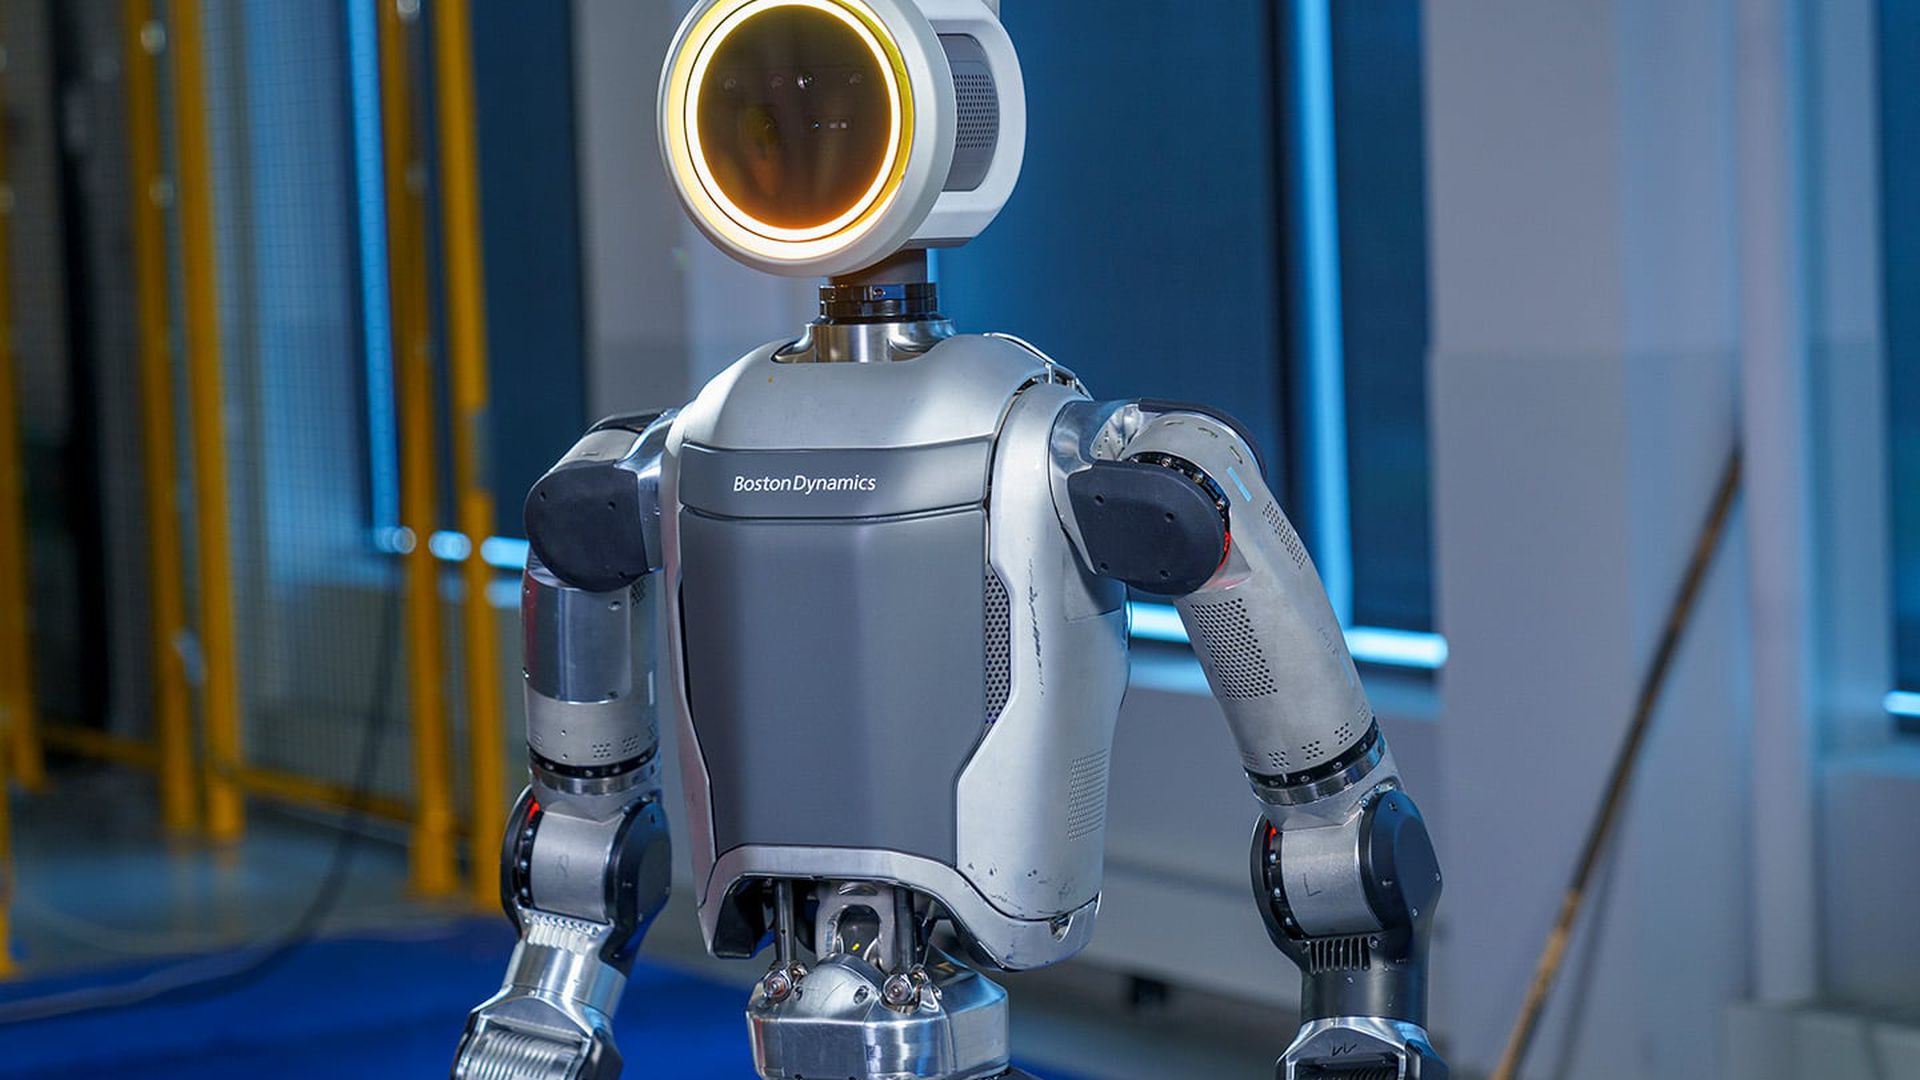 boston dynamics’ new atlas robot is a swiveling, shape-shifting nightmare